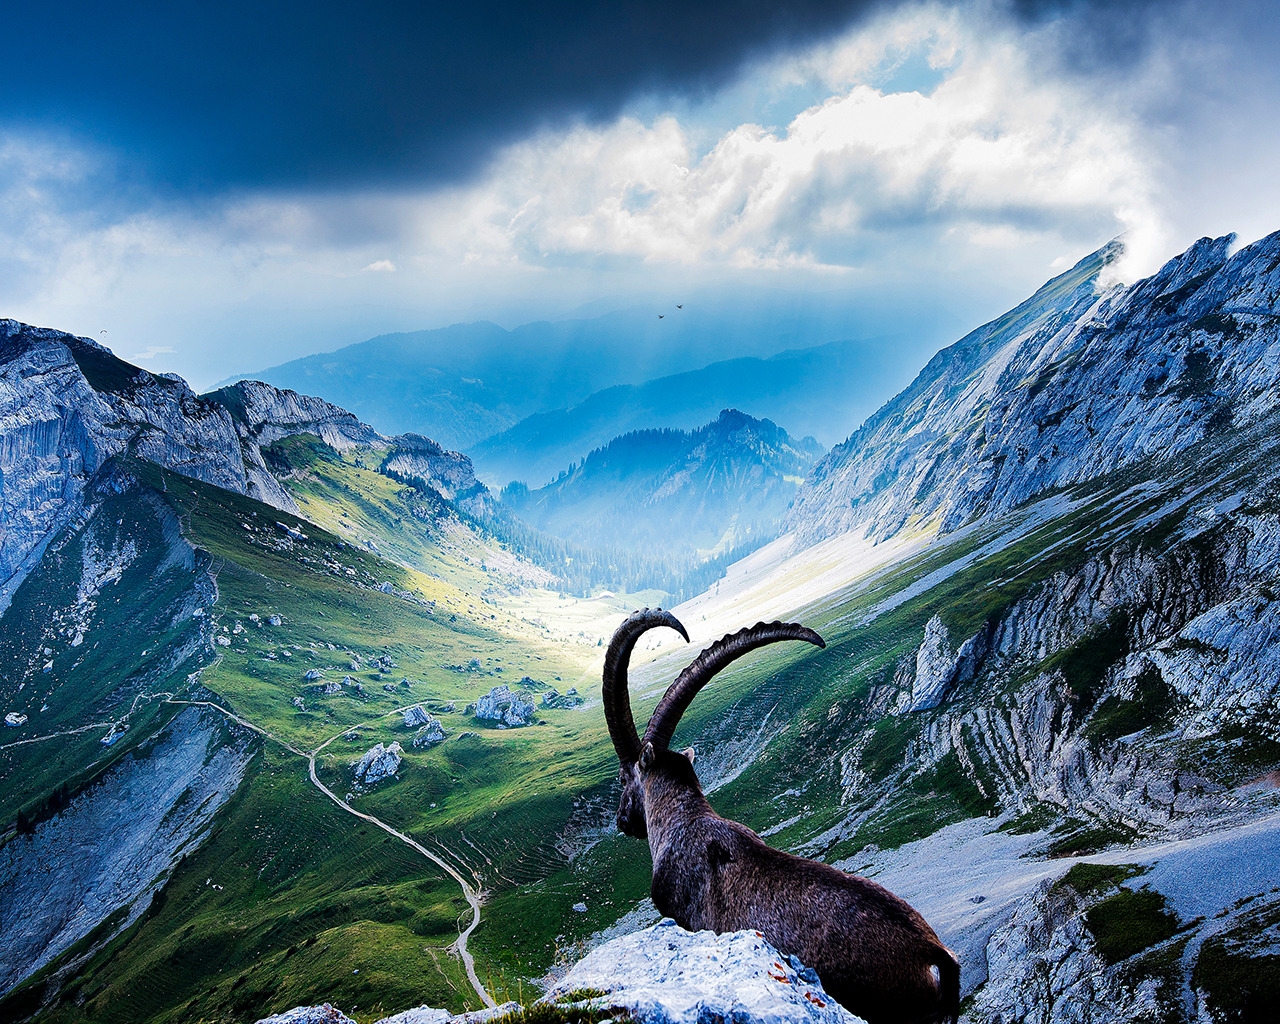 Goat at Mount Pilatus for 1280 x 1024 resolution